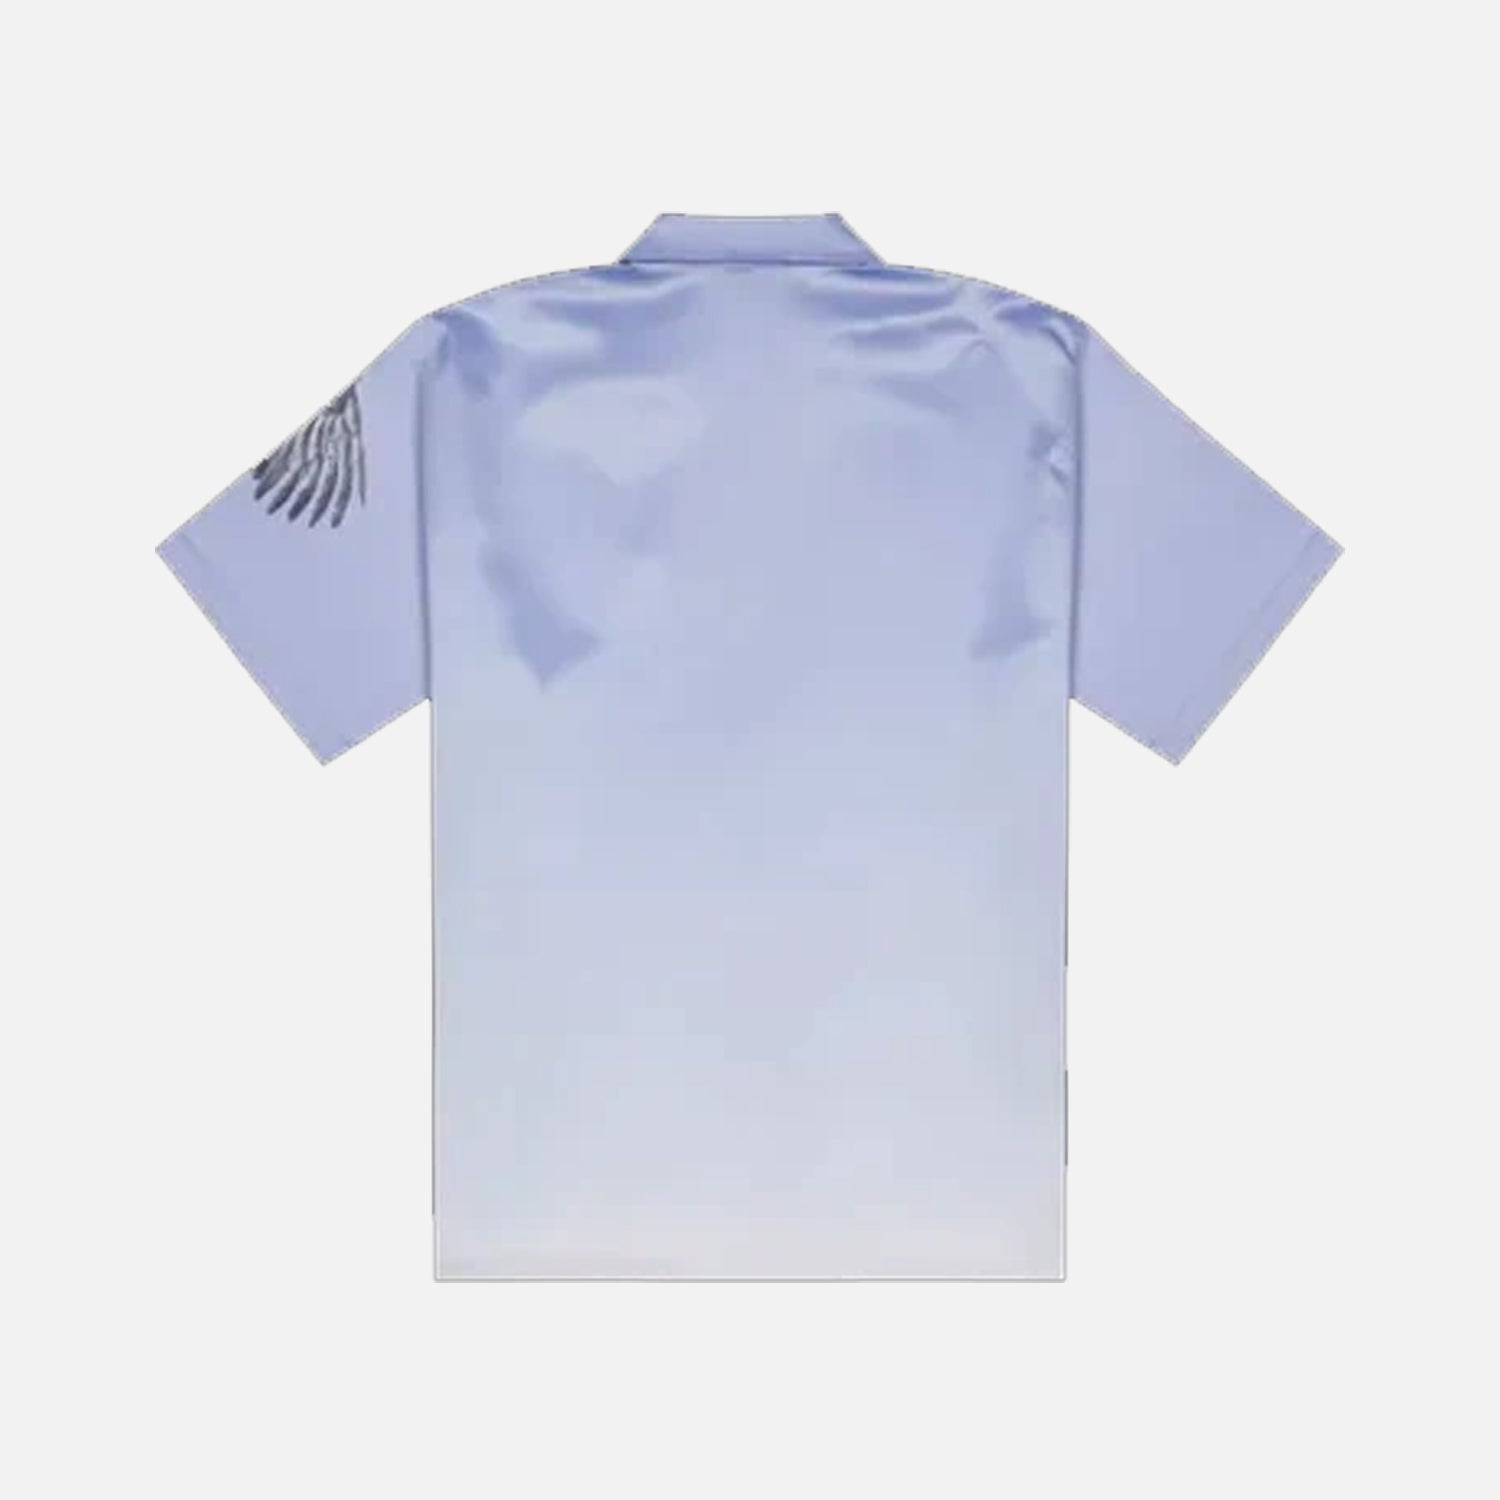 Trapstar Flying Bird Shirt - Blue / White